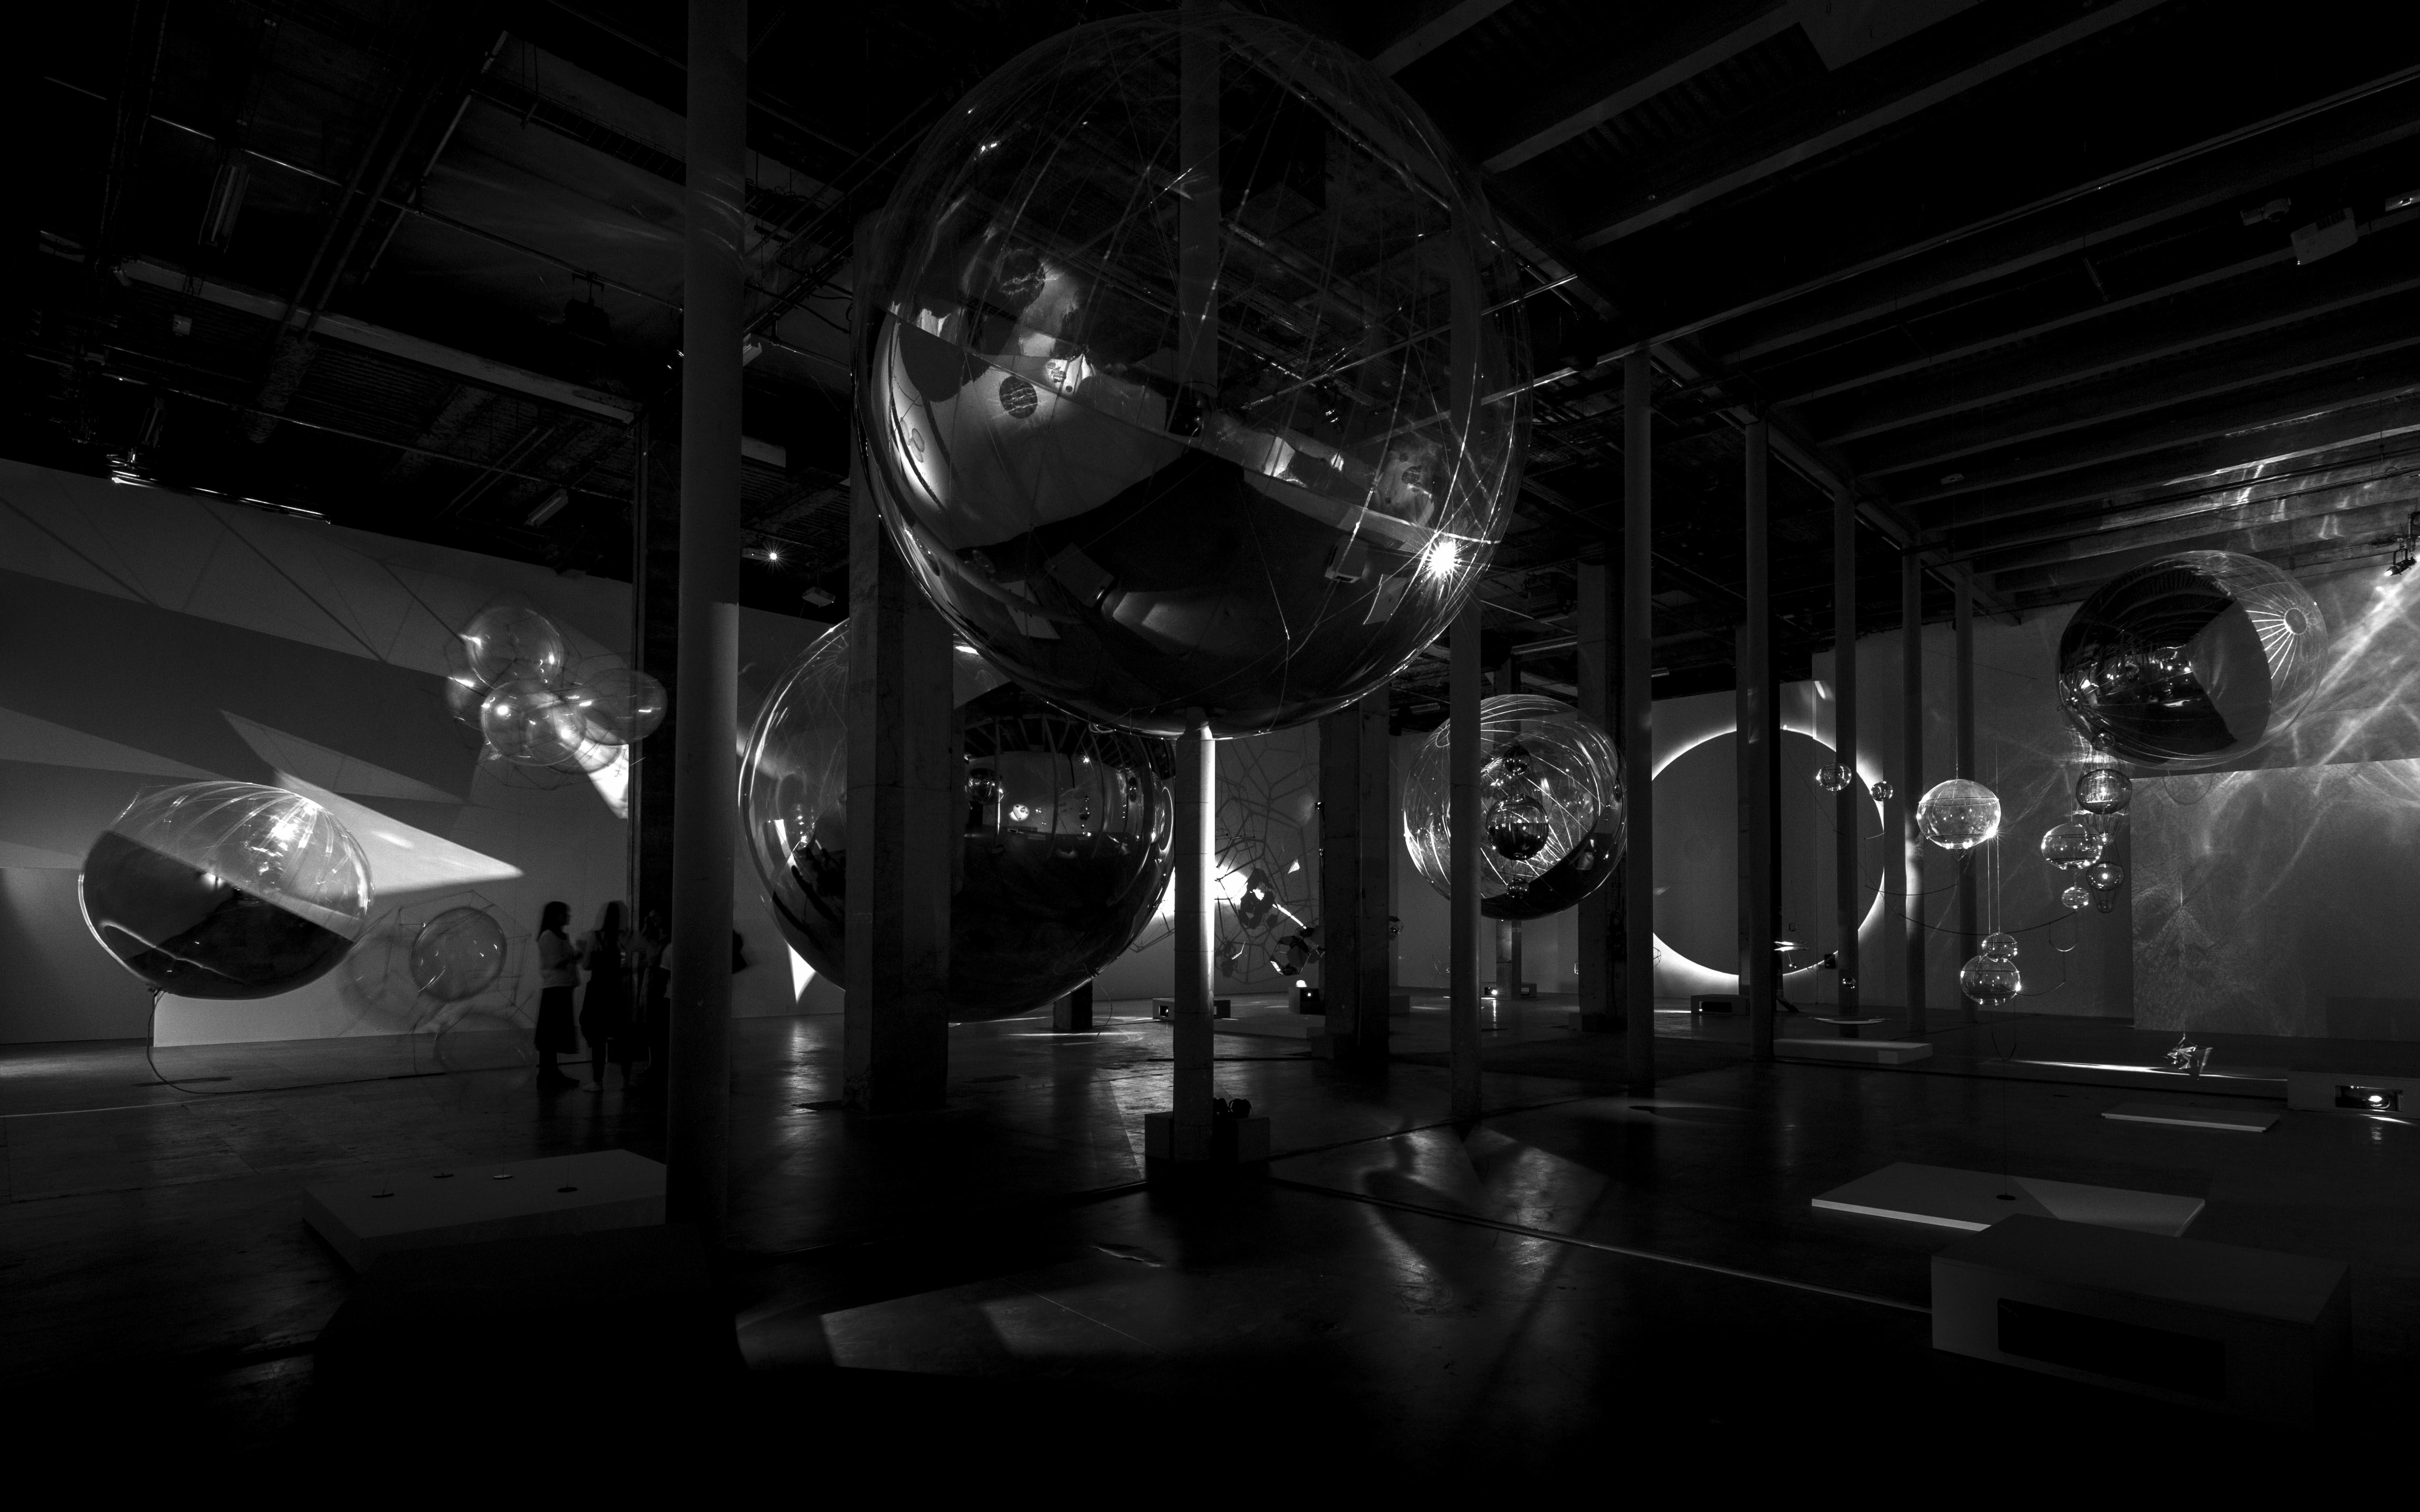 Installation view of 'On Air' at the Palais de Tokyo, Paris. Photo by Studio Tomás Saraceno, 2018.